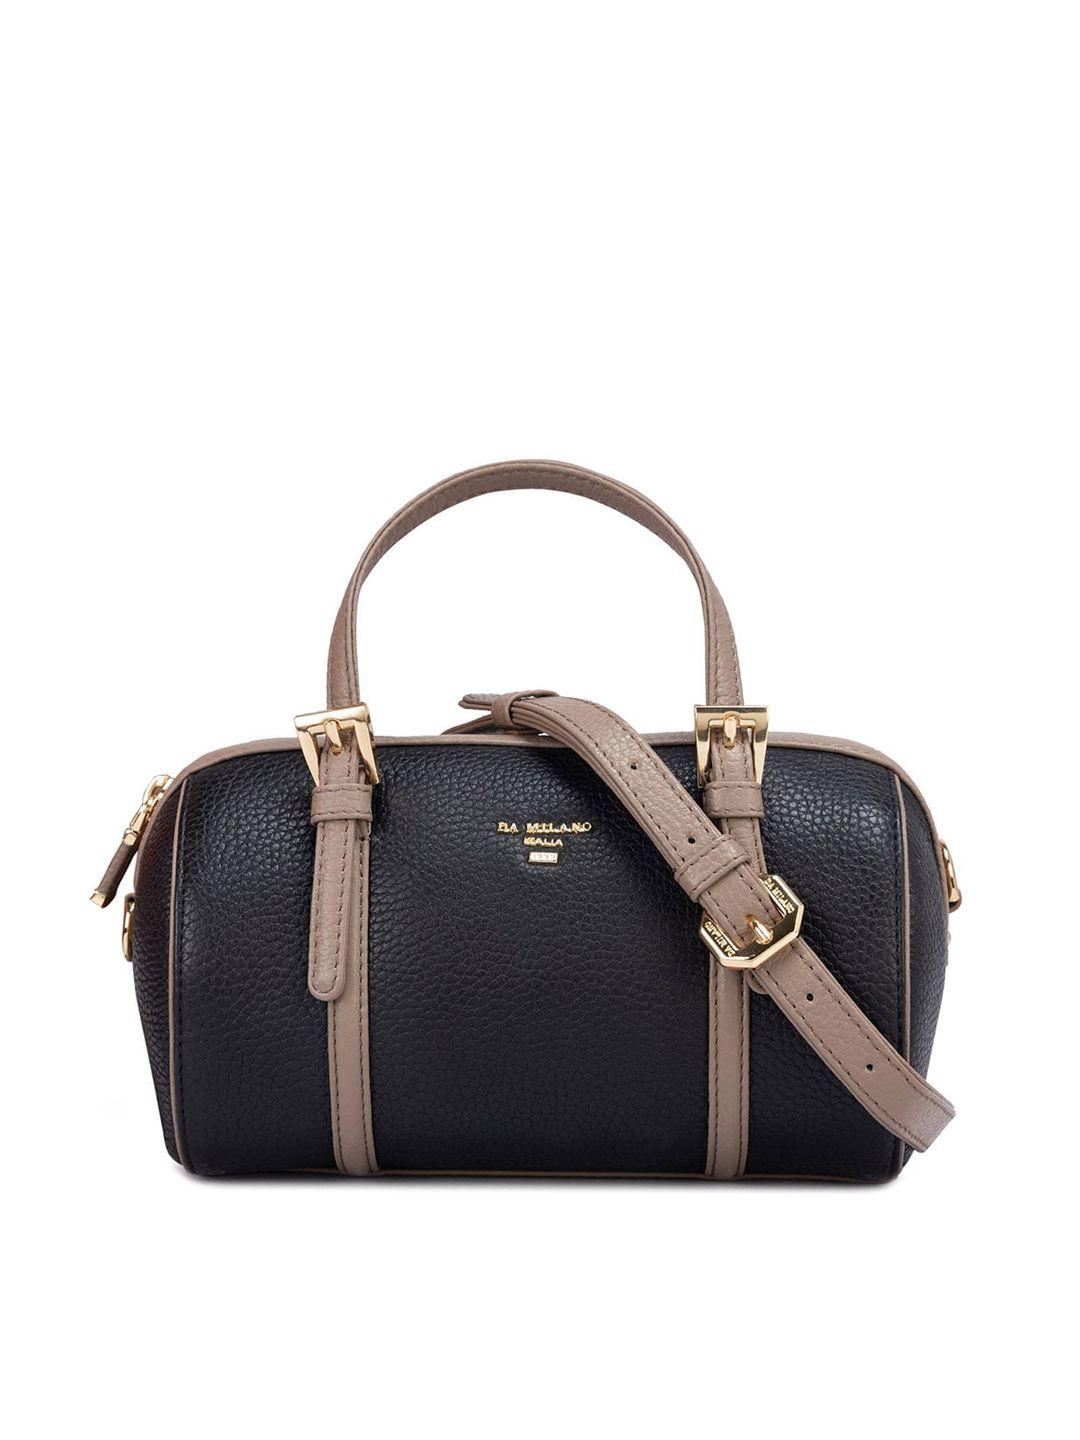 da milano textured leather structured handheld bag